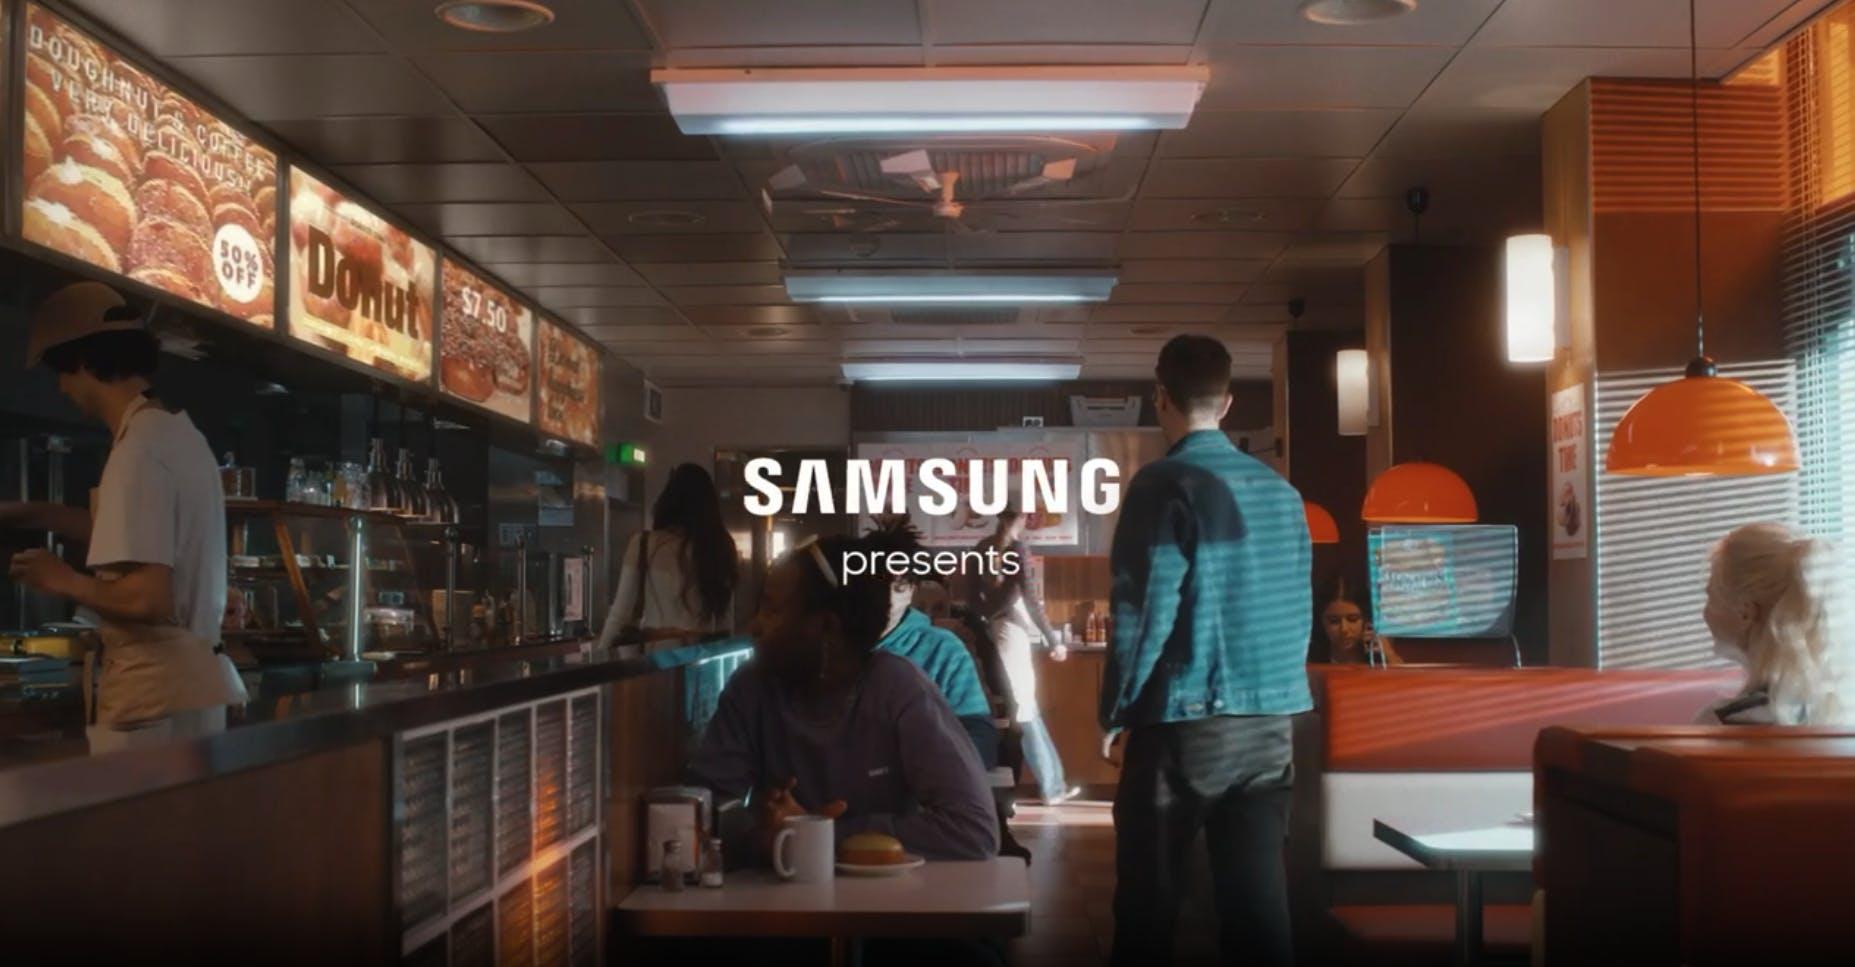 Samsung presents, title screen